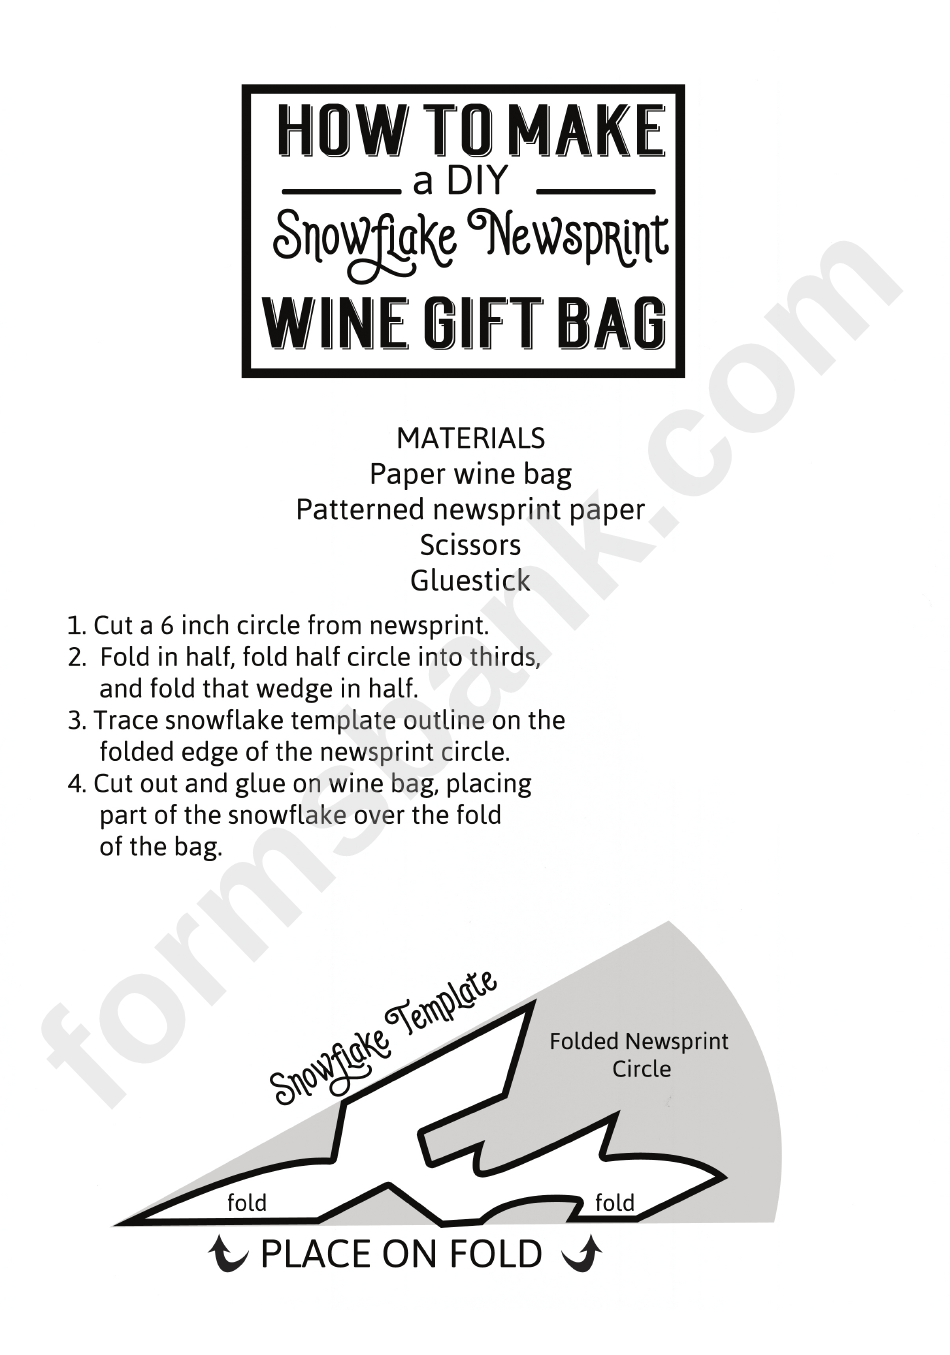 Making A Diy Snowflake Newsprint Wine Gift Bag